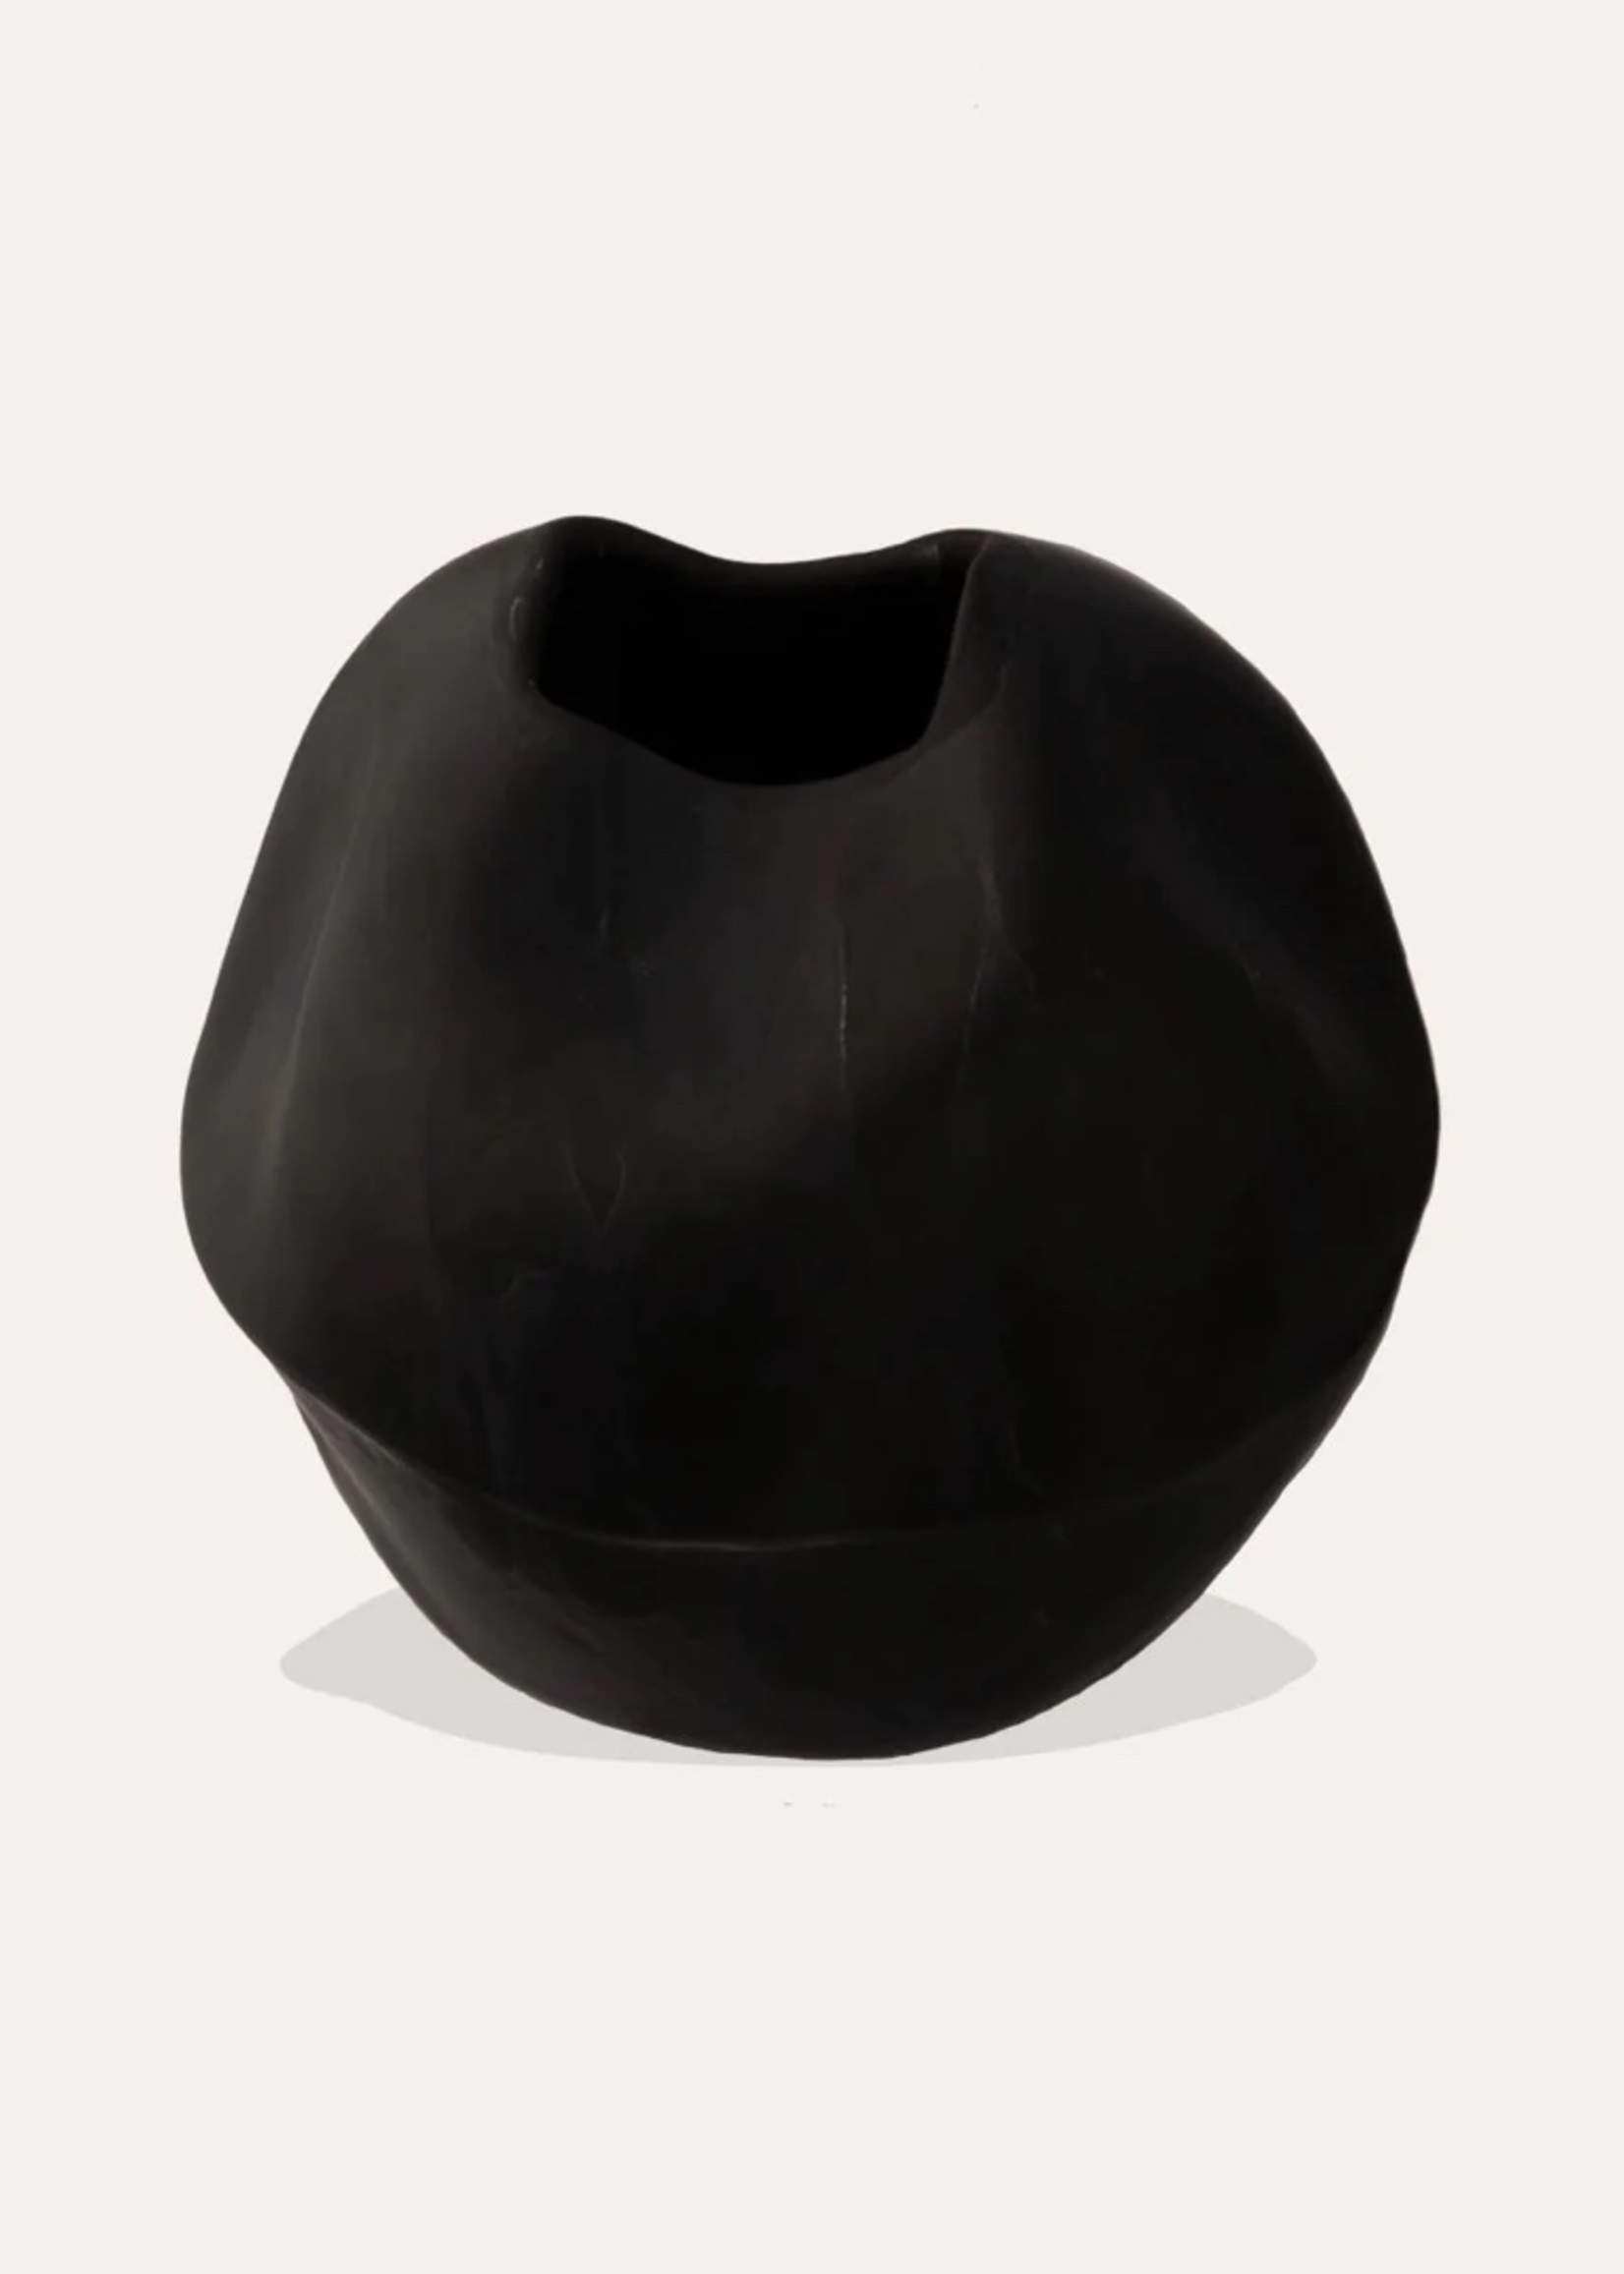 Completedworks Crumpled Round Vase in Matte Black